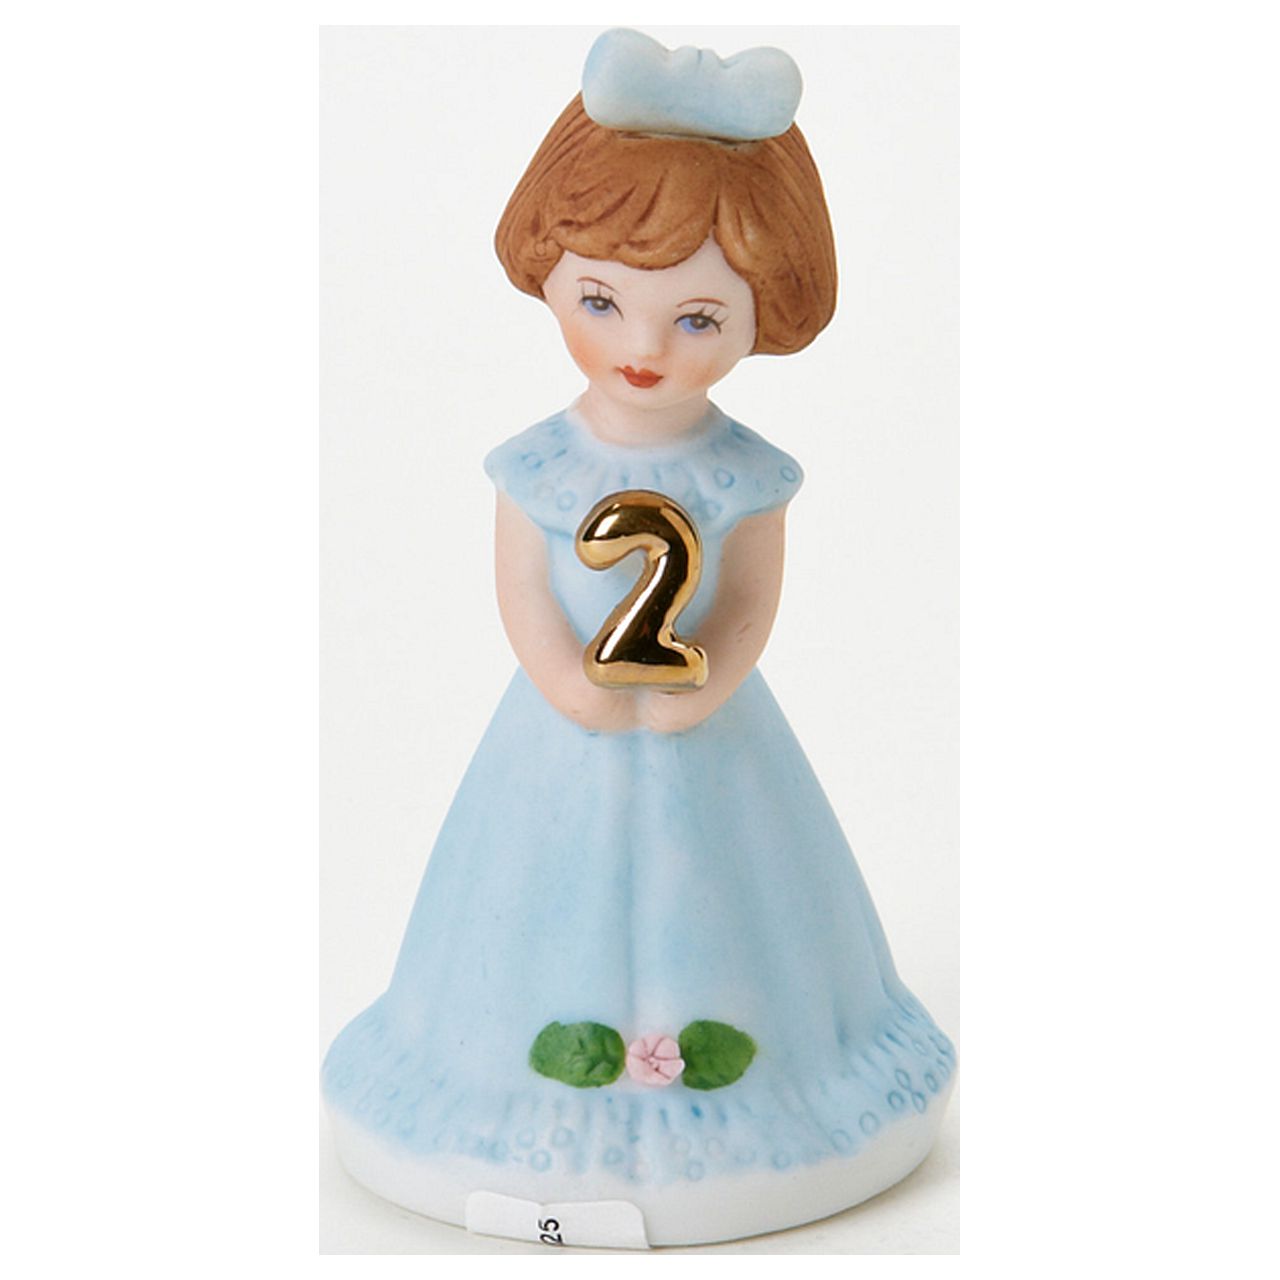 Growing Up Birthday Girls Brunette Age 2 Porcelain Bisque Figurine Q-GL648 - image 5 of 5